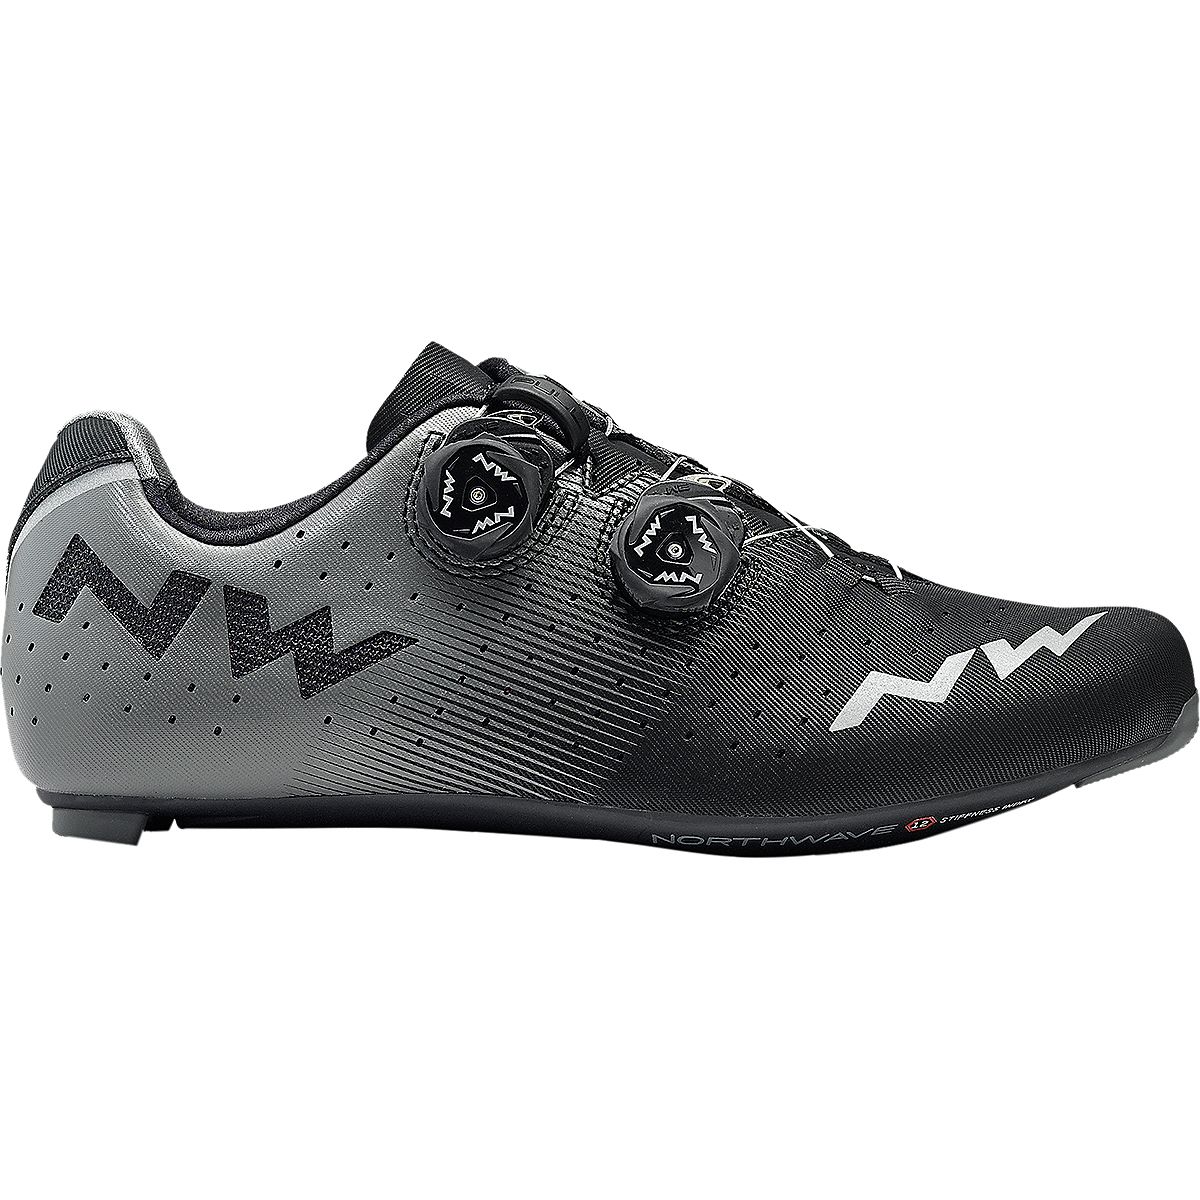 Northwave Revolution Cycling Shoe - Men's